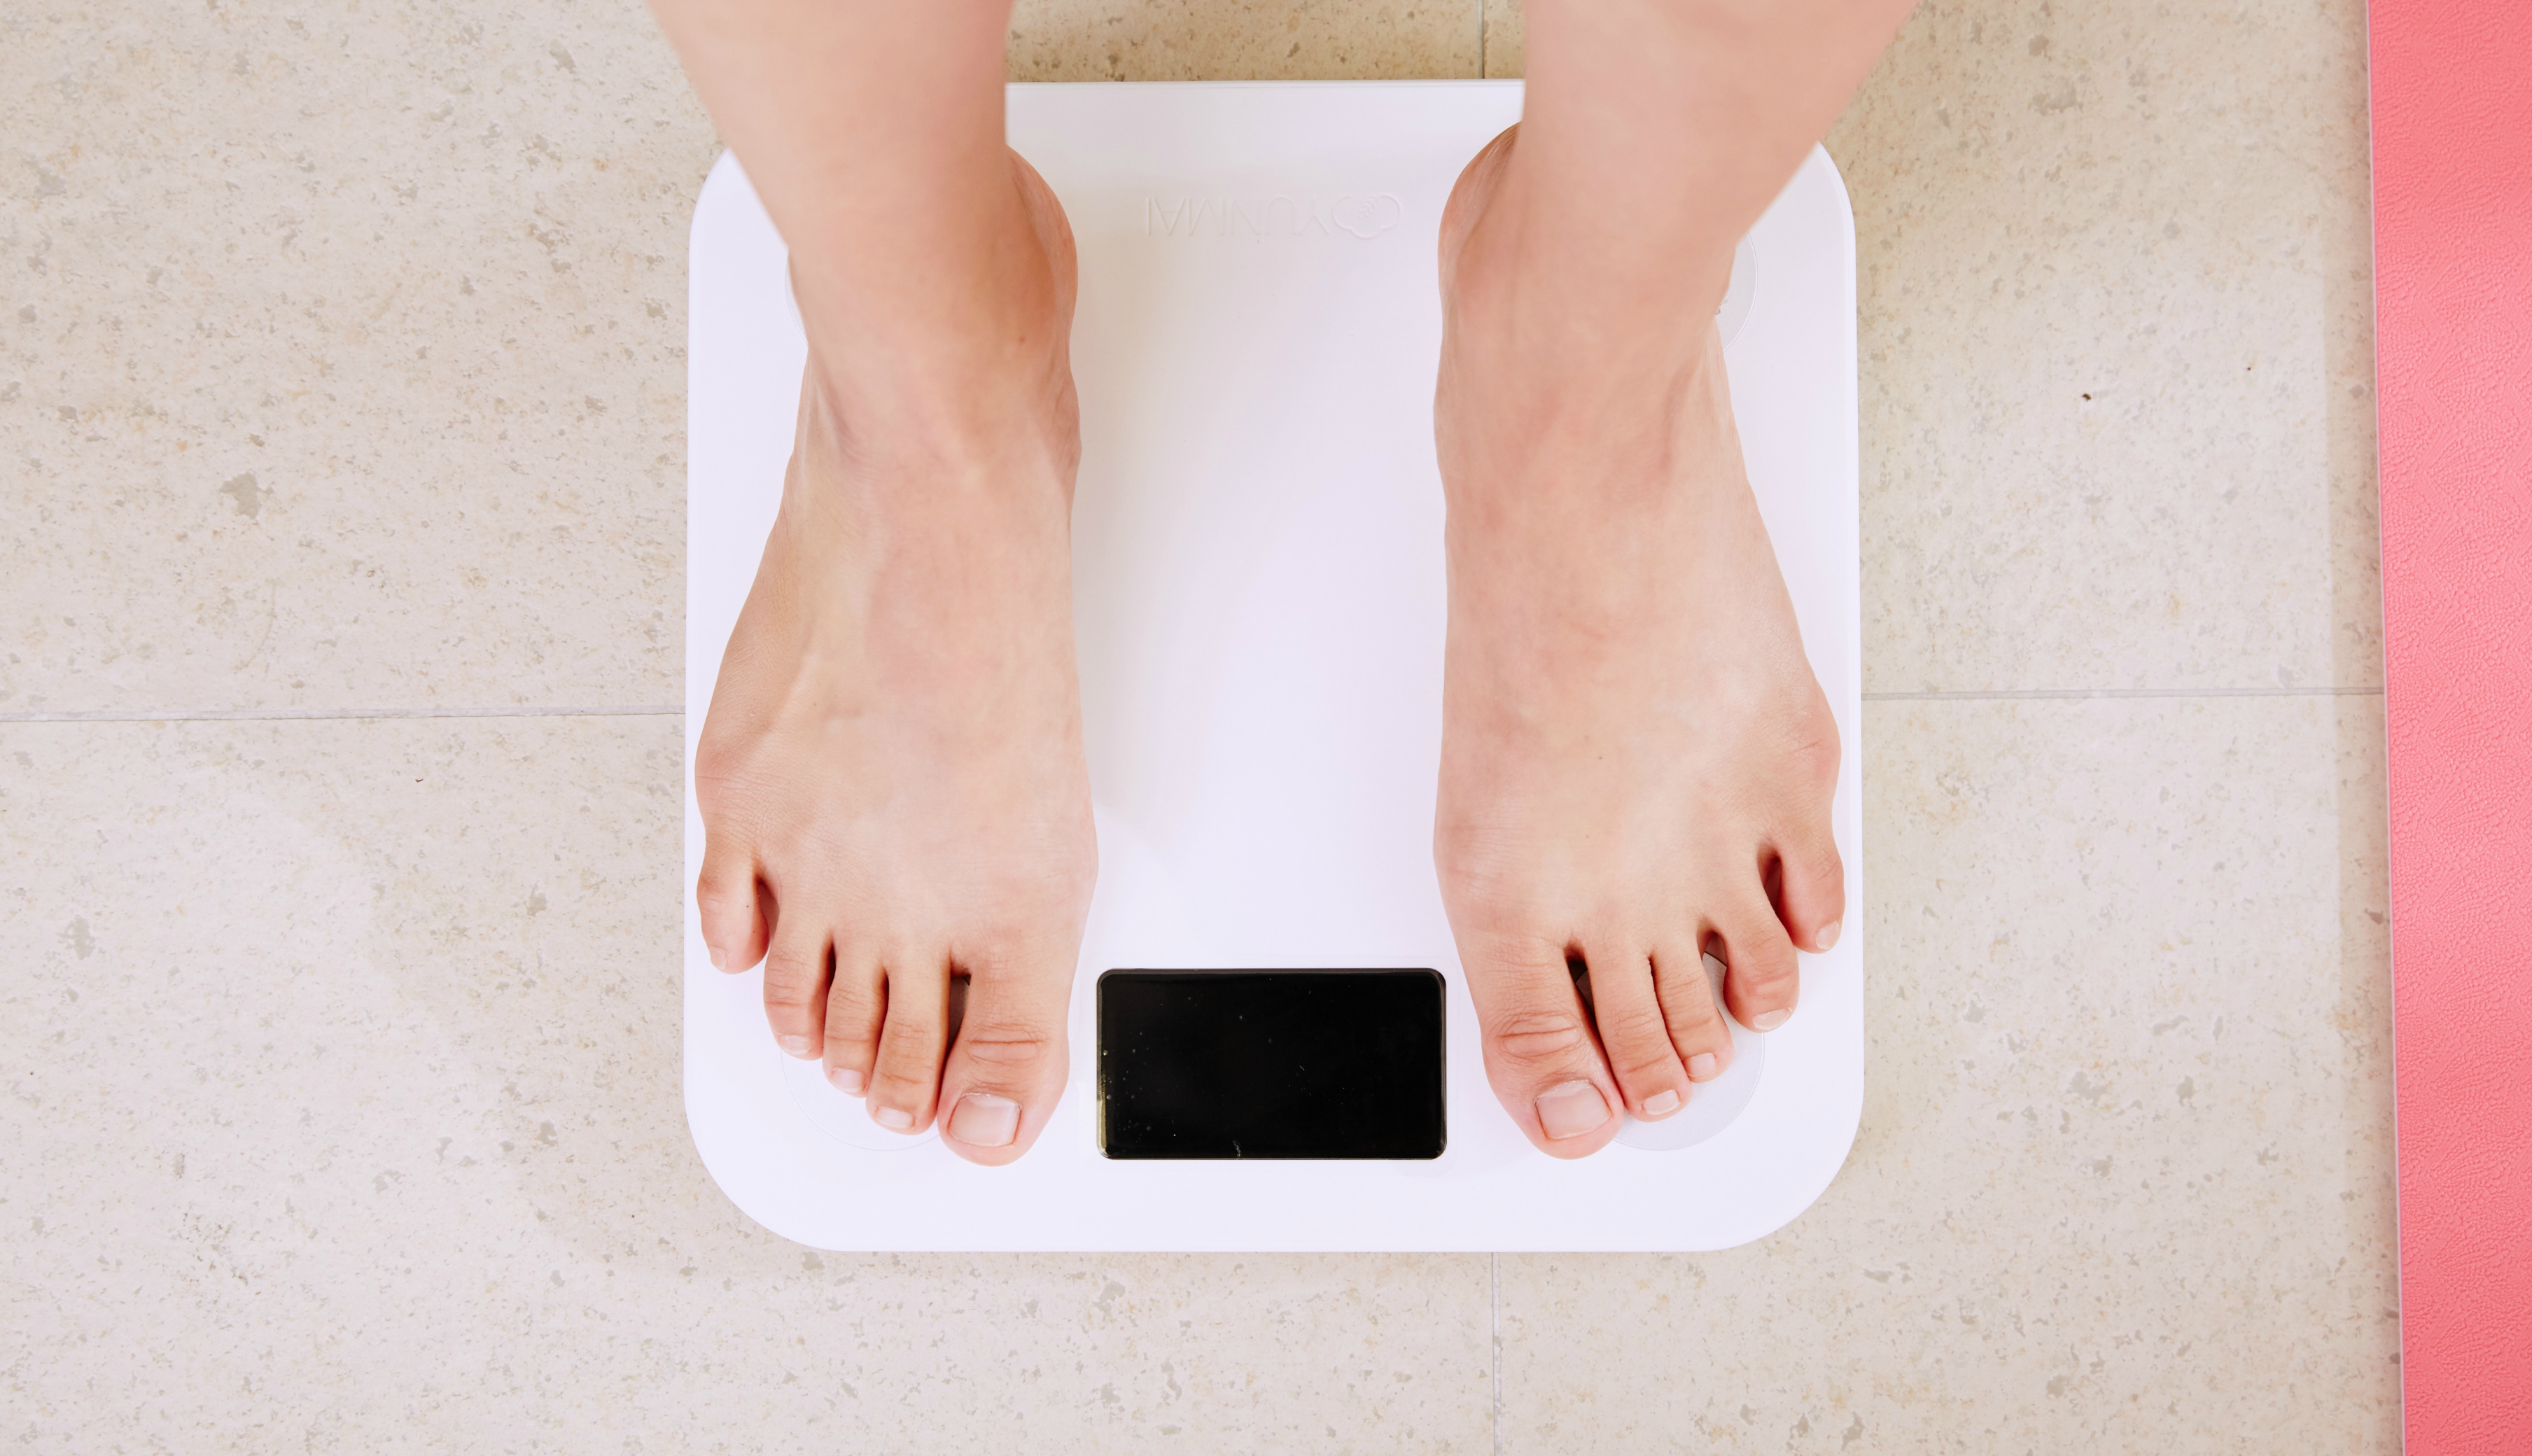 Arthritis and weight management